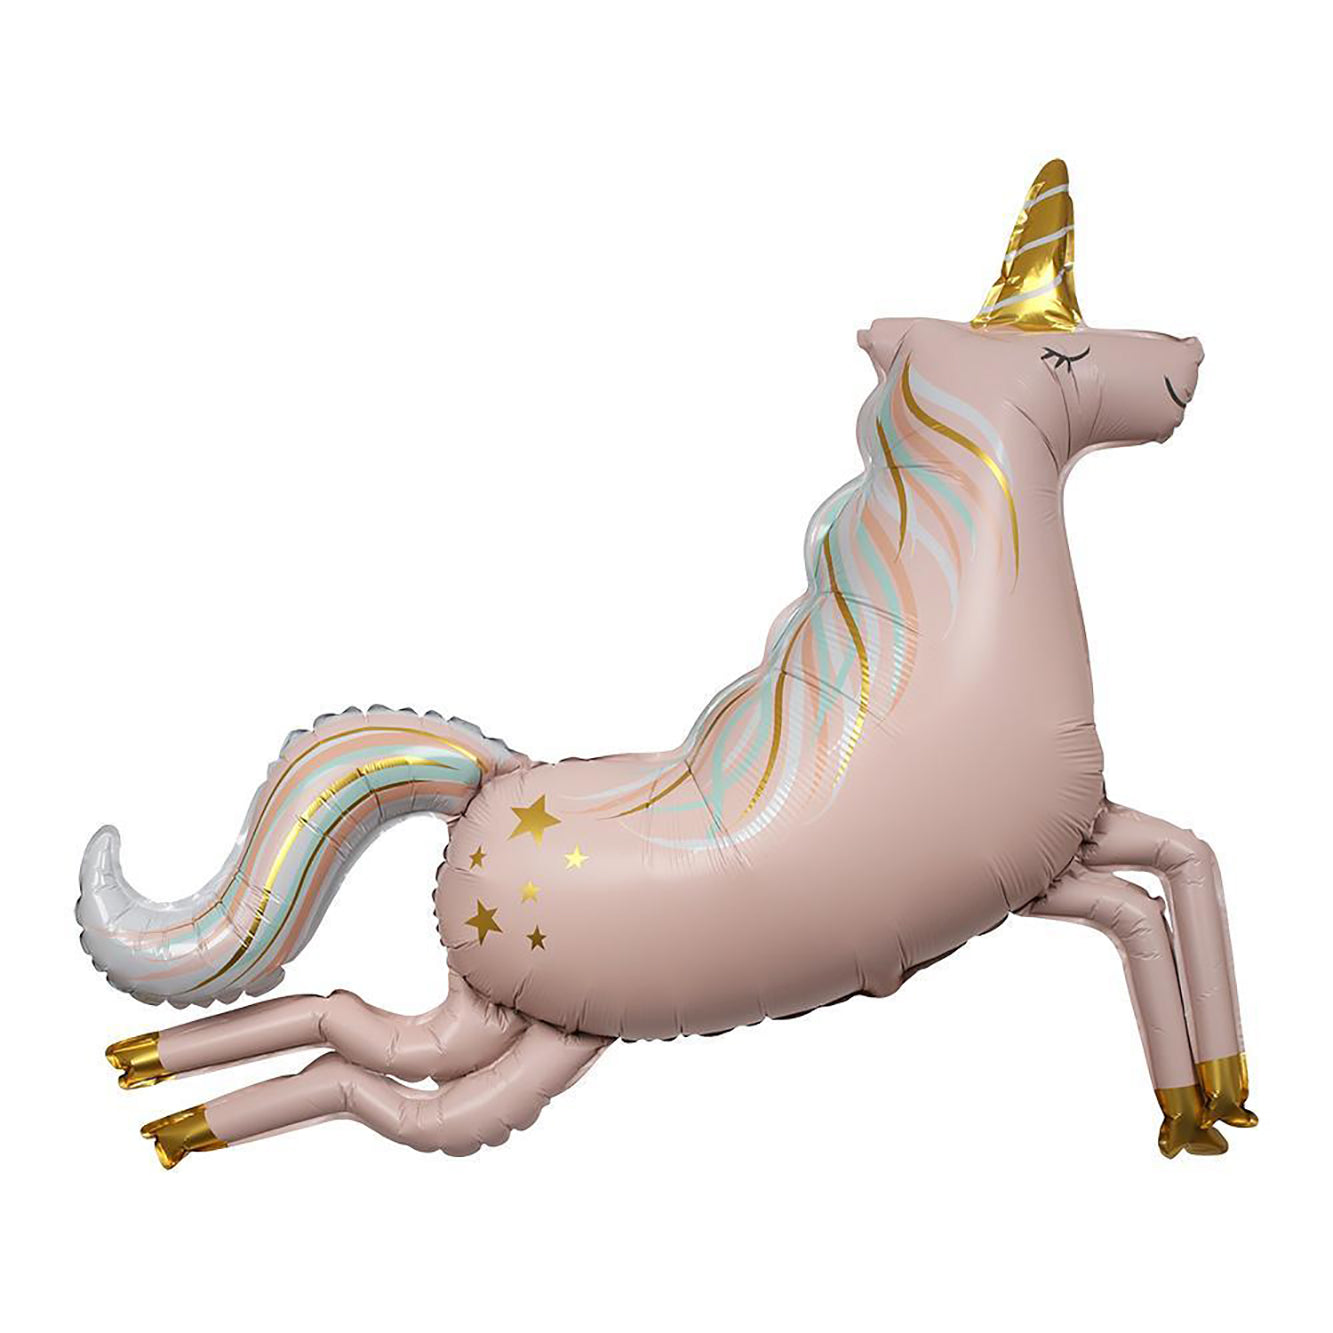 Magical Unicorn Mylar Balloon - The Pretty Prop Shop Parties, Auckland New Zealand